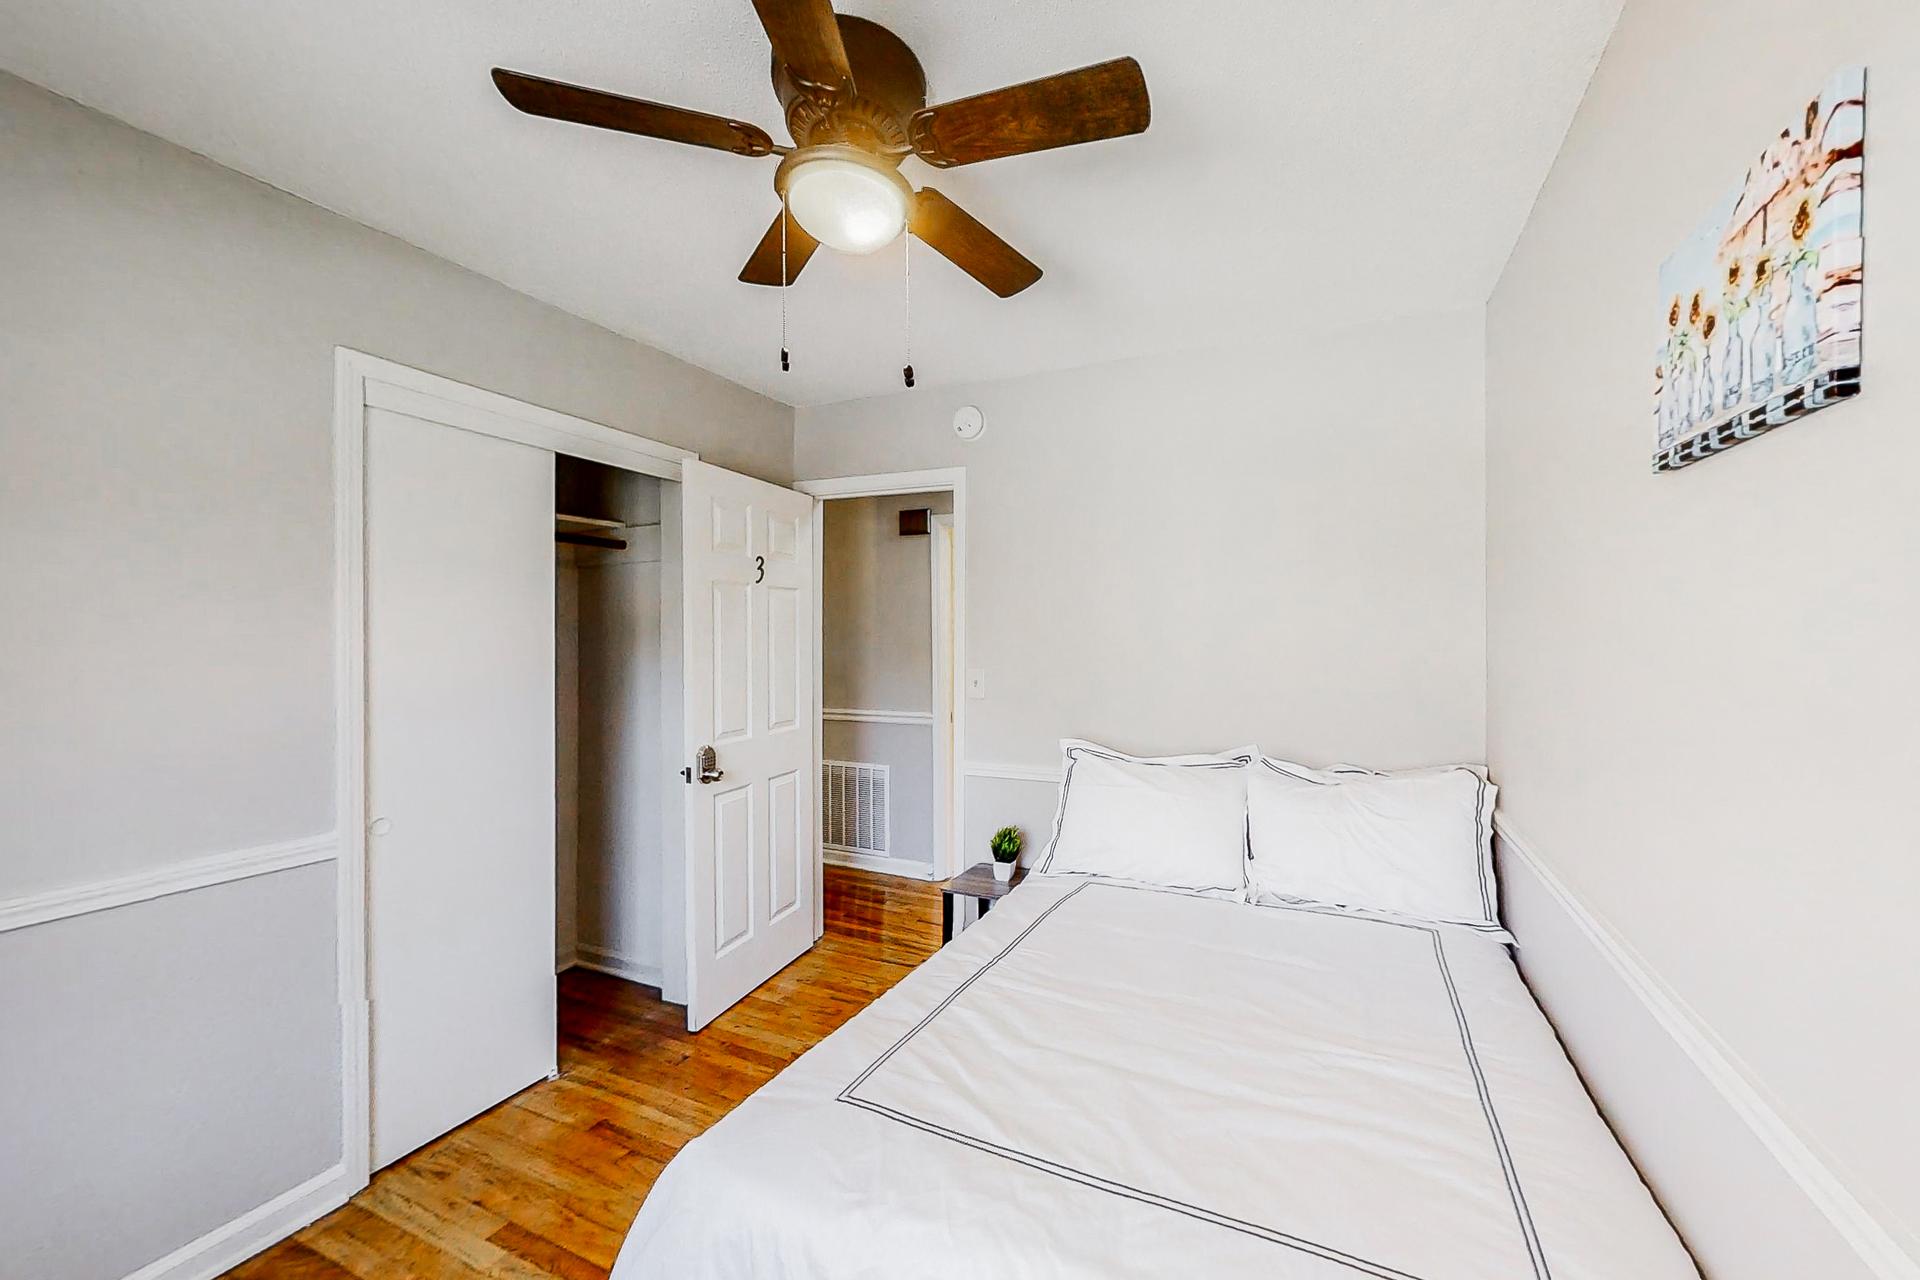 bedroom, detected: ceiling fan, bed, window blind